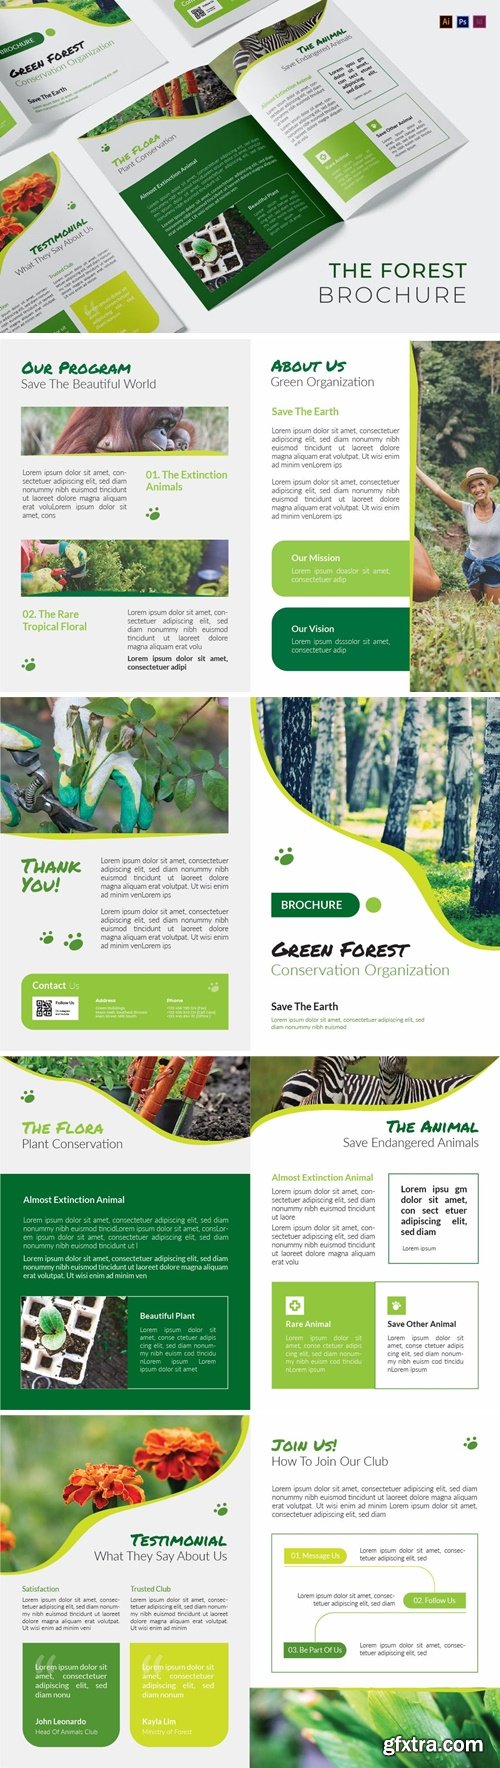 Forest Conservation Brochure ENTP7X8